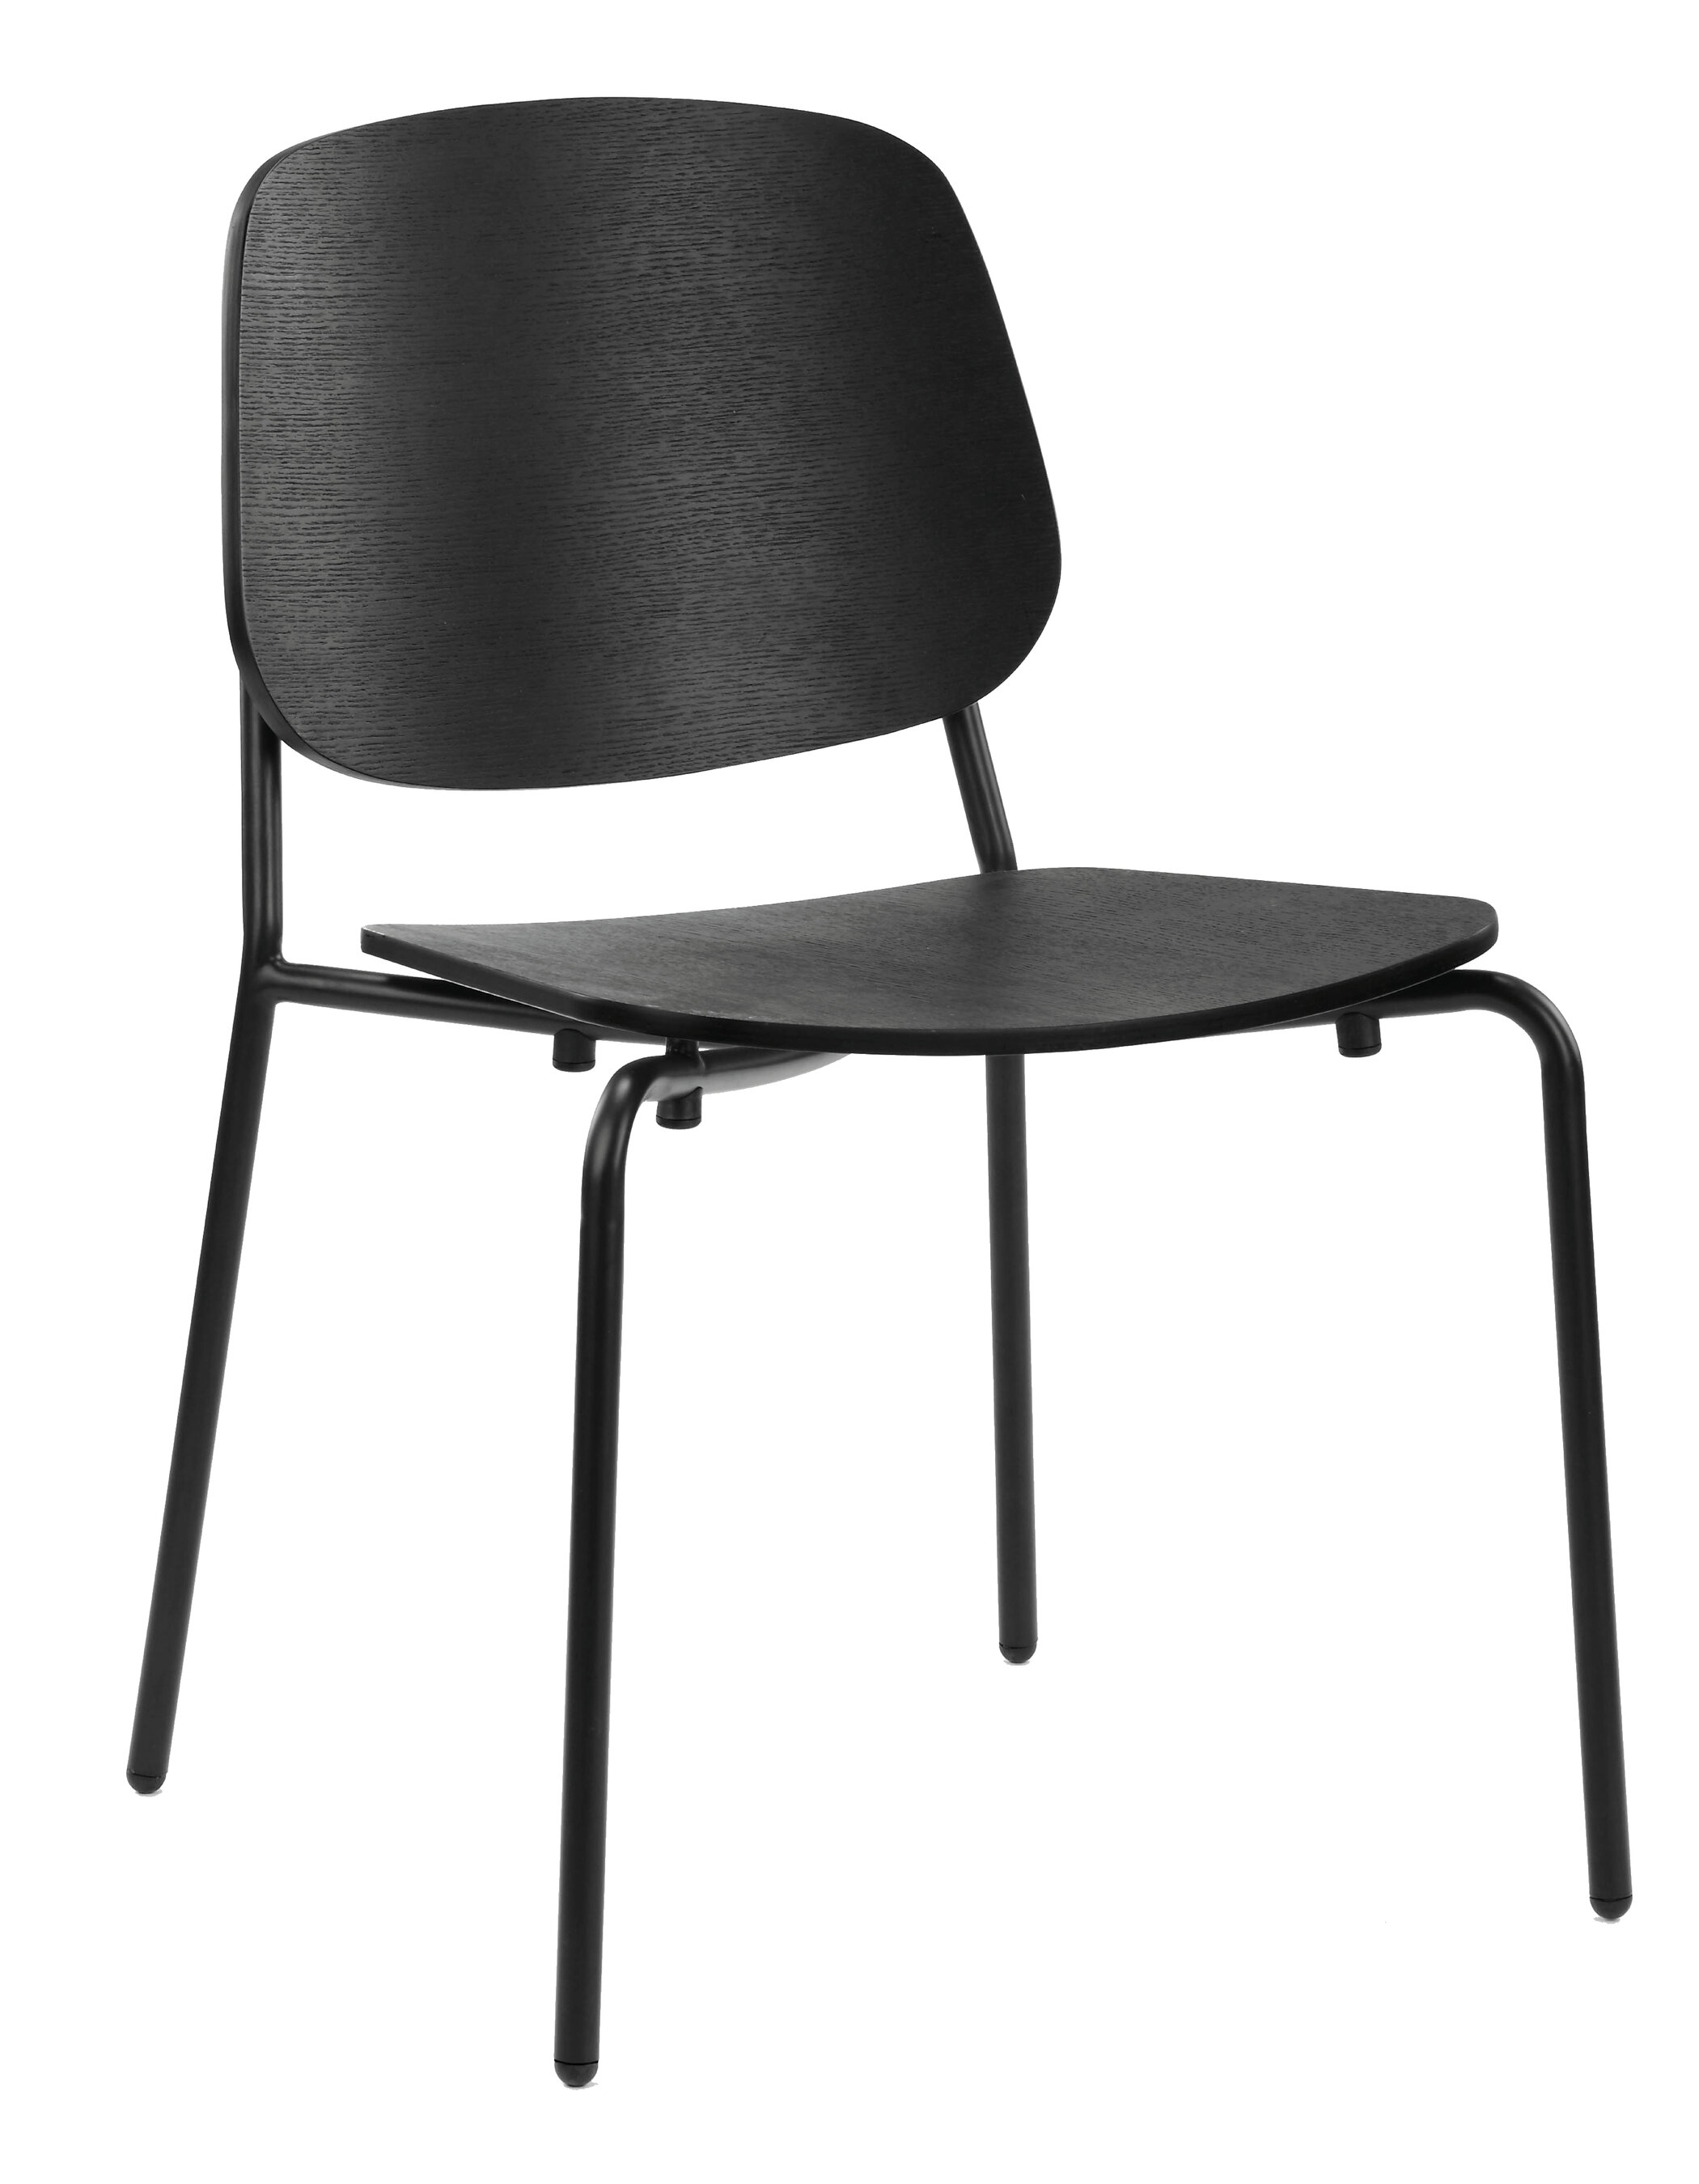 WS - Platform chair - Black ash (Front angle)